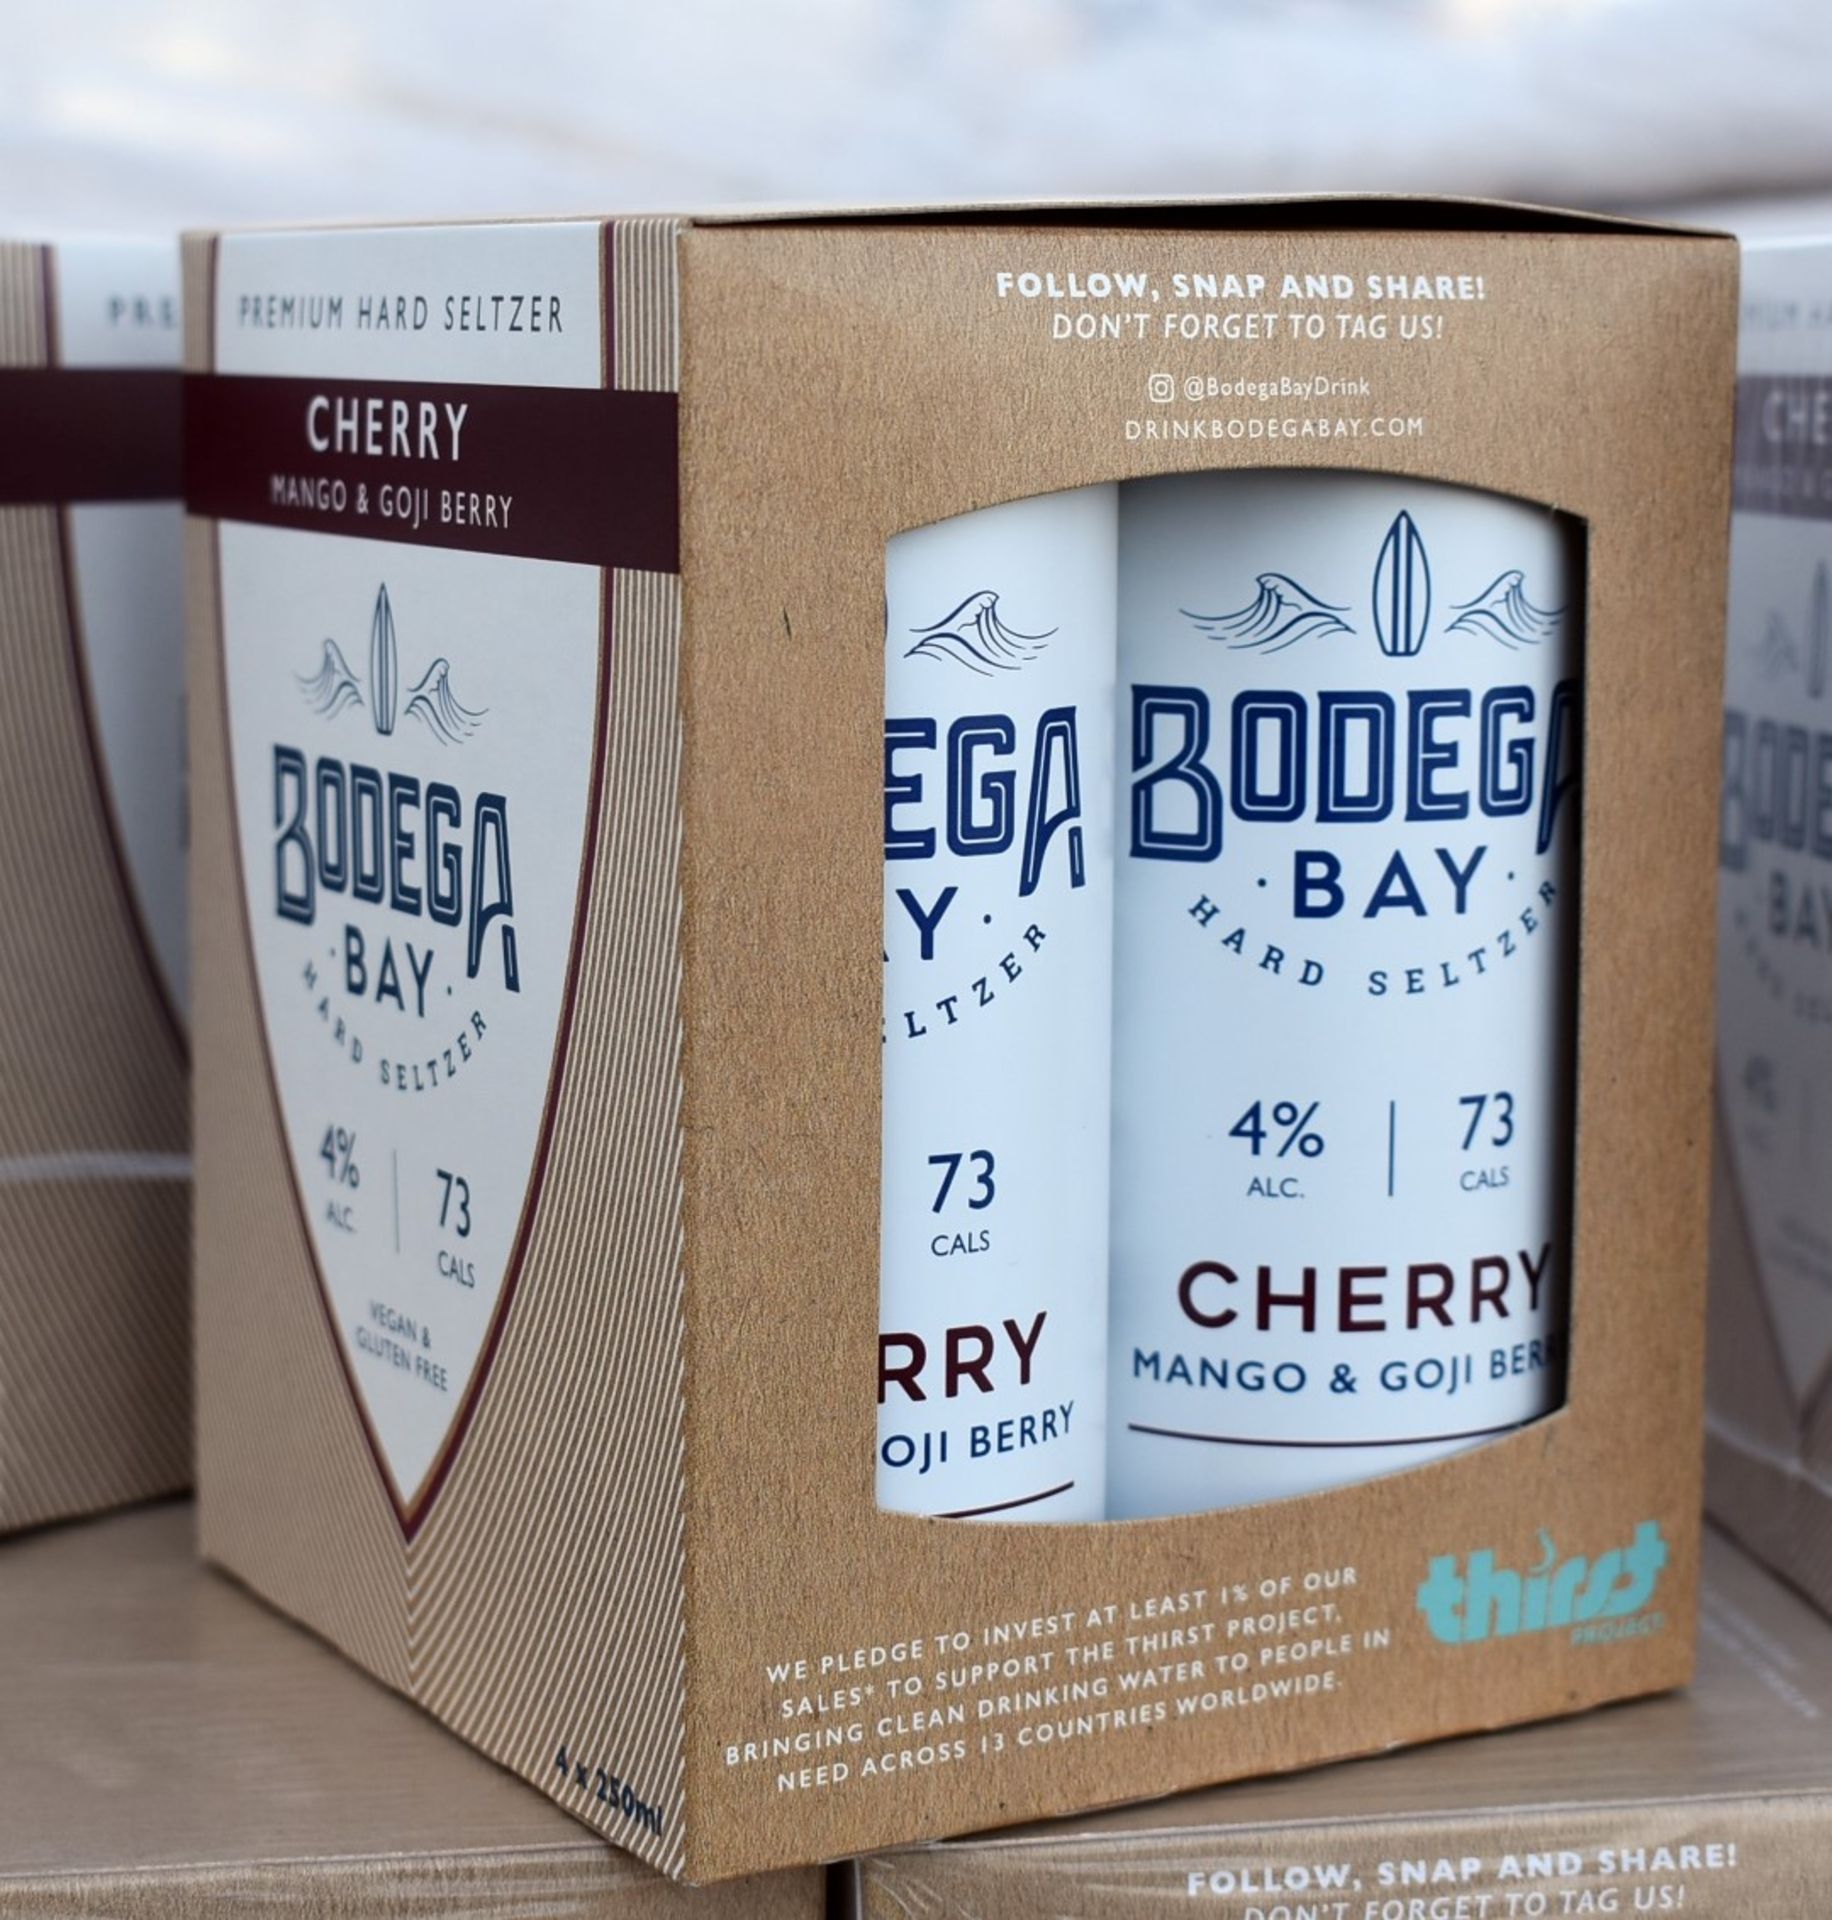 24 x Bodega Bay Hard Seltzer 250ml Alcoholic Sparkling Water Drinks - Cherry Mango & Goji Berry - 4% - Image 2 of 7